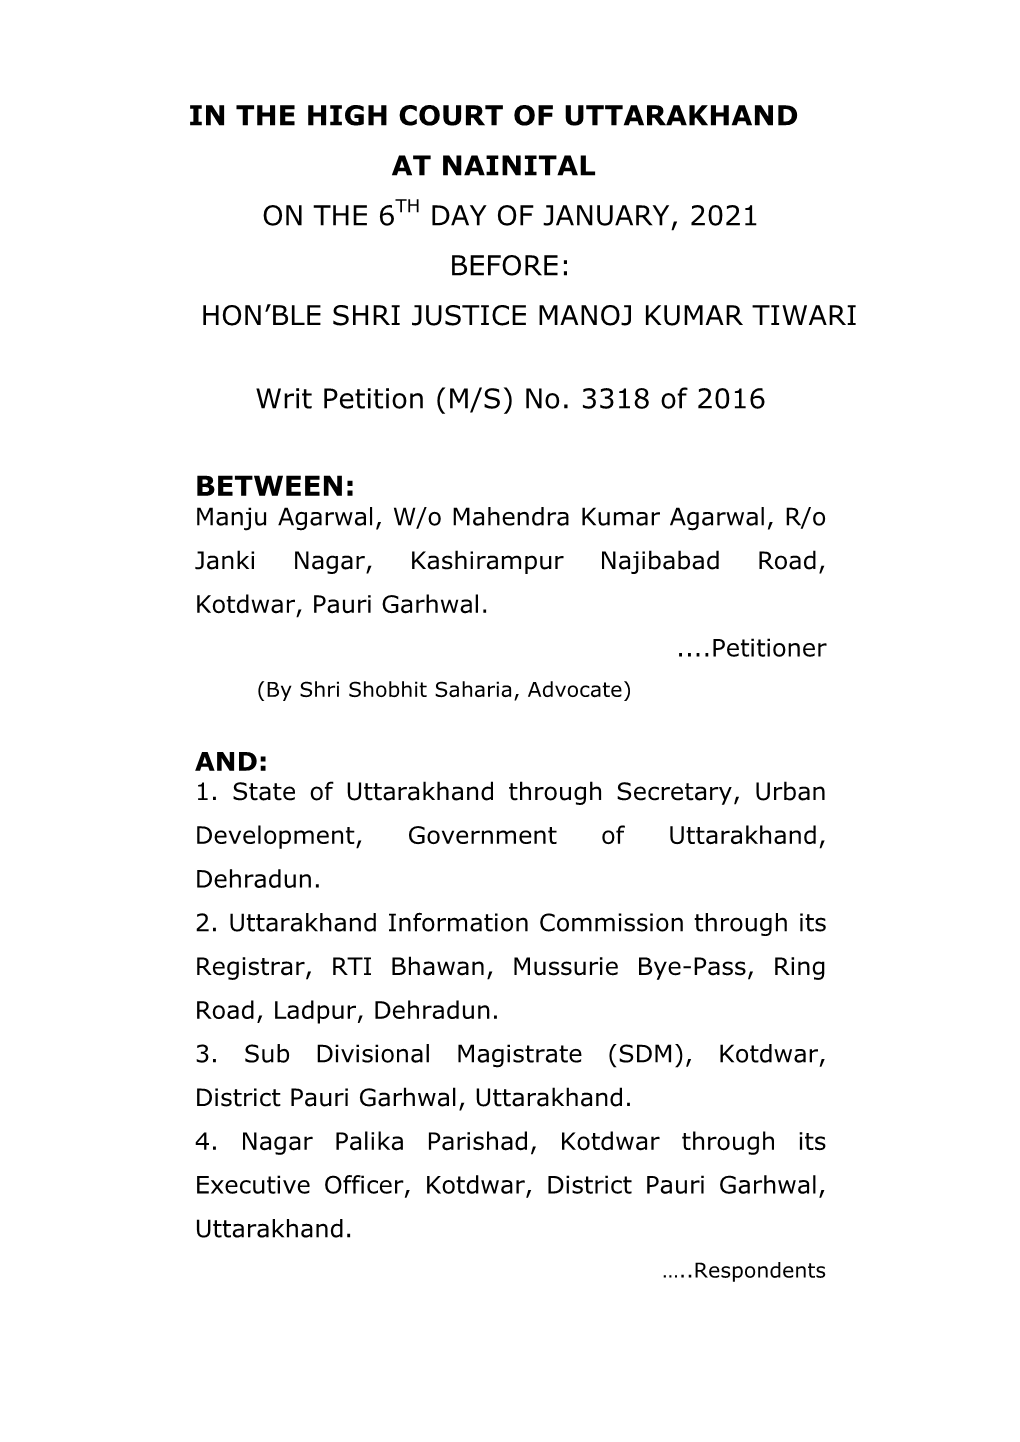 High Court of Uttarakhand at Nainital on the 6Th Day of January, 2021 Before: Hon’Ble Shri Justice Manoj Kumar Tiwari